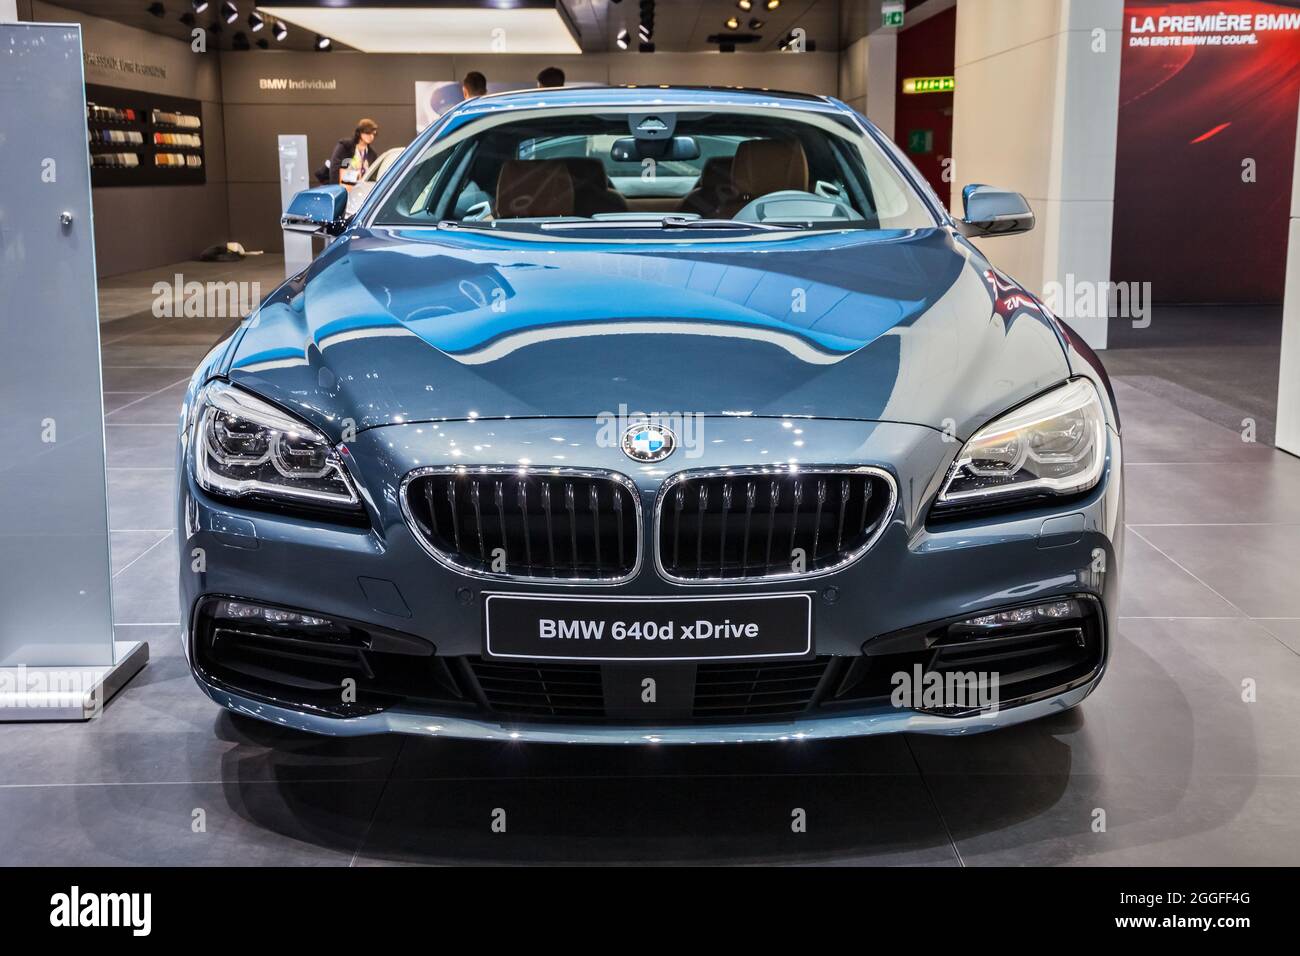 BMW 640d xDrive car showcased at the Geneva International Motor Show. Switzerland - March 1, 2016. Stock Photo